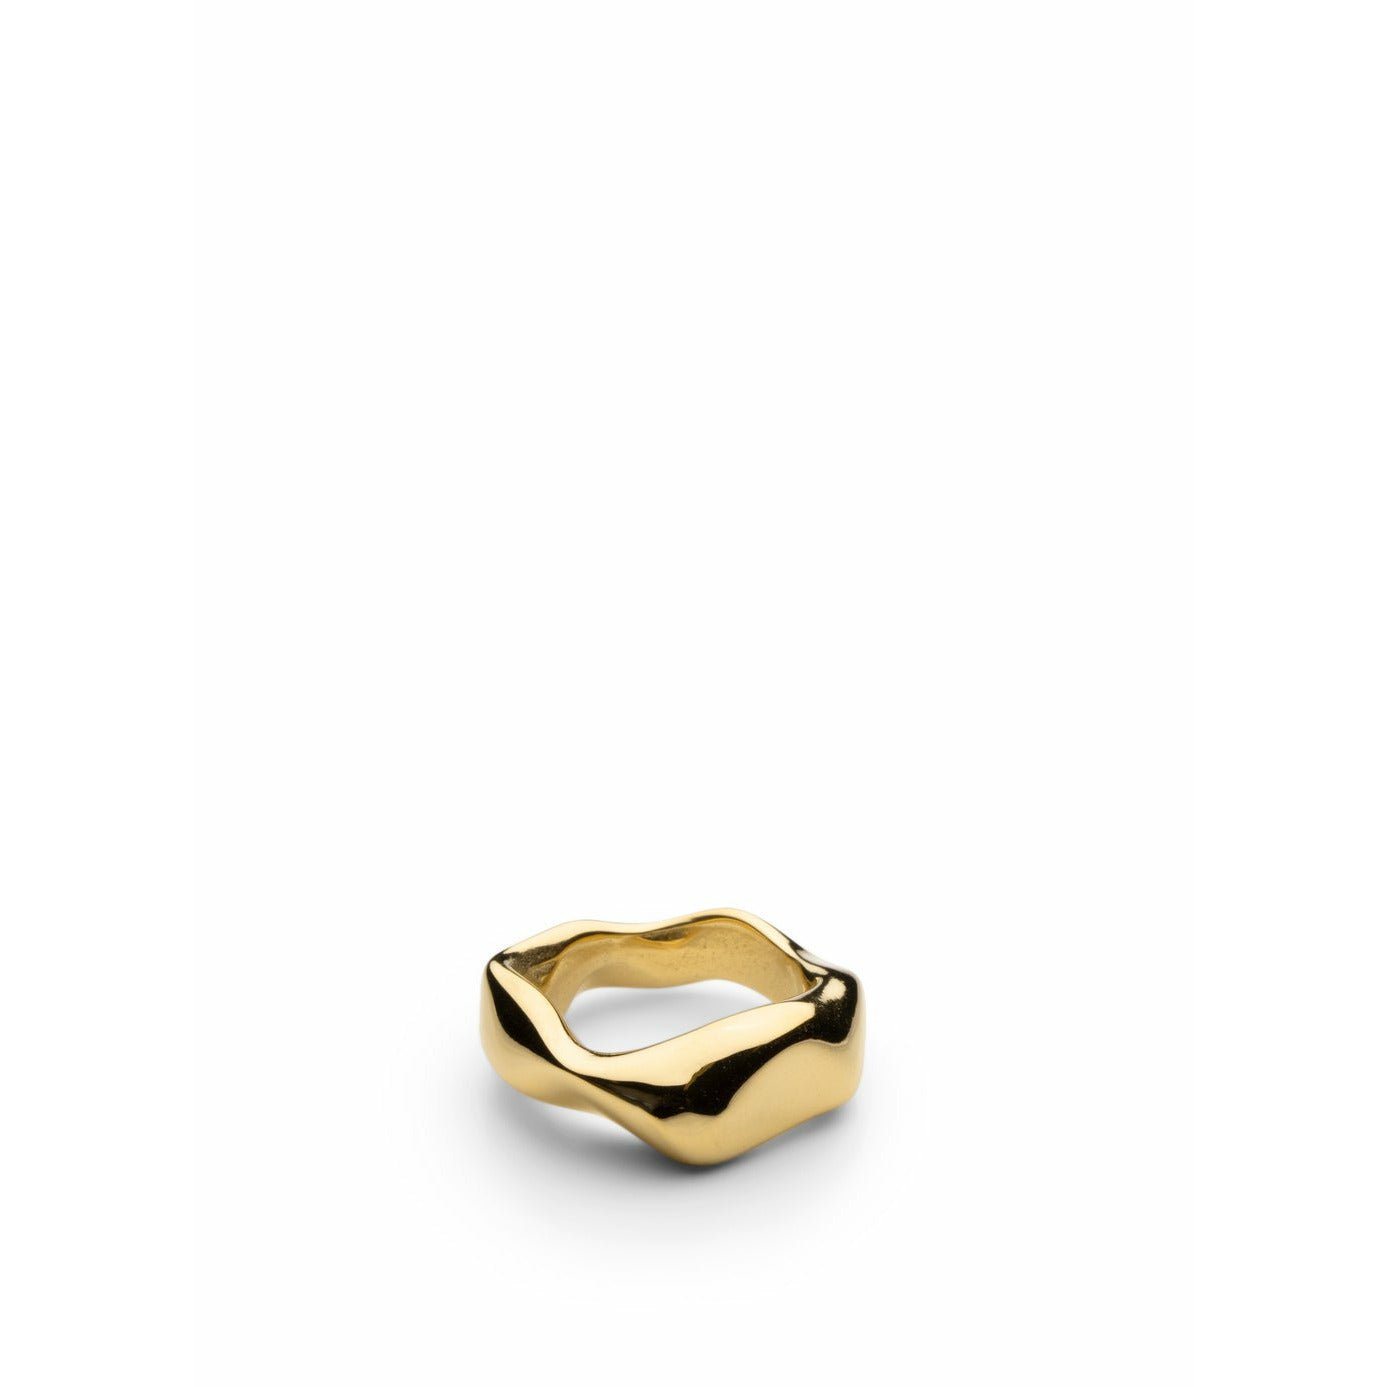 Skultuna Chunky Petit Ring Medium Gold Plated, ø1,81 Cm